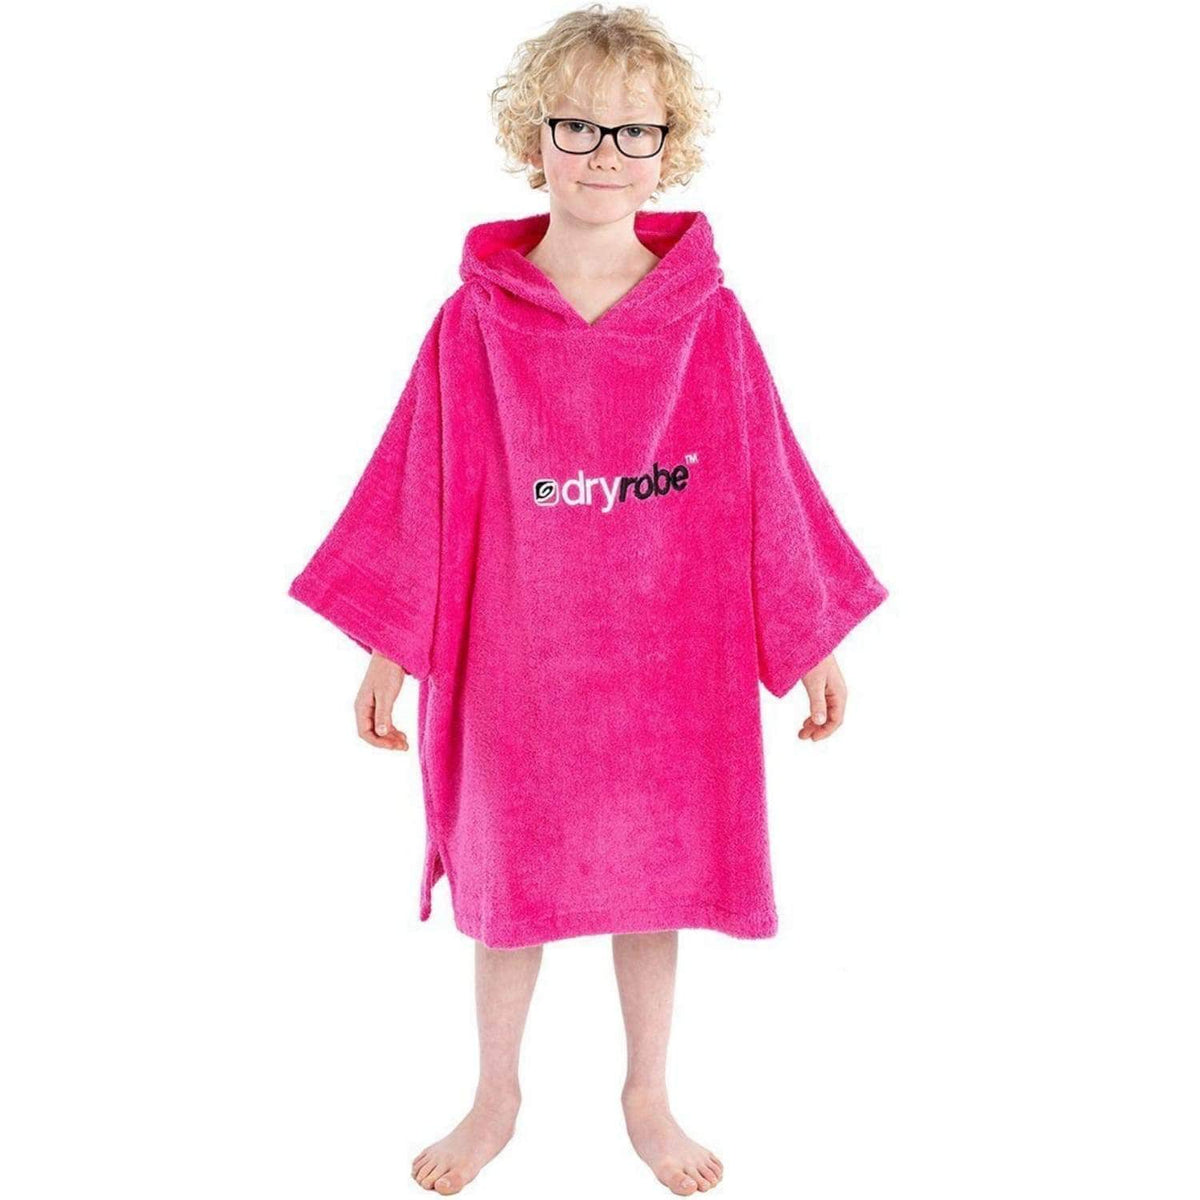 Dryrobe Kids Organic Cotton Short Sleeve Towel Robe - Pink - Changing Robe Poncho Towel by Dryrobe 10-14 Years